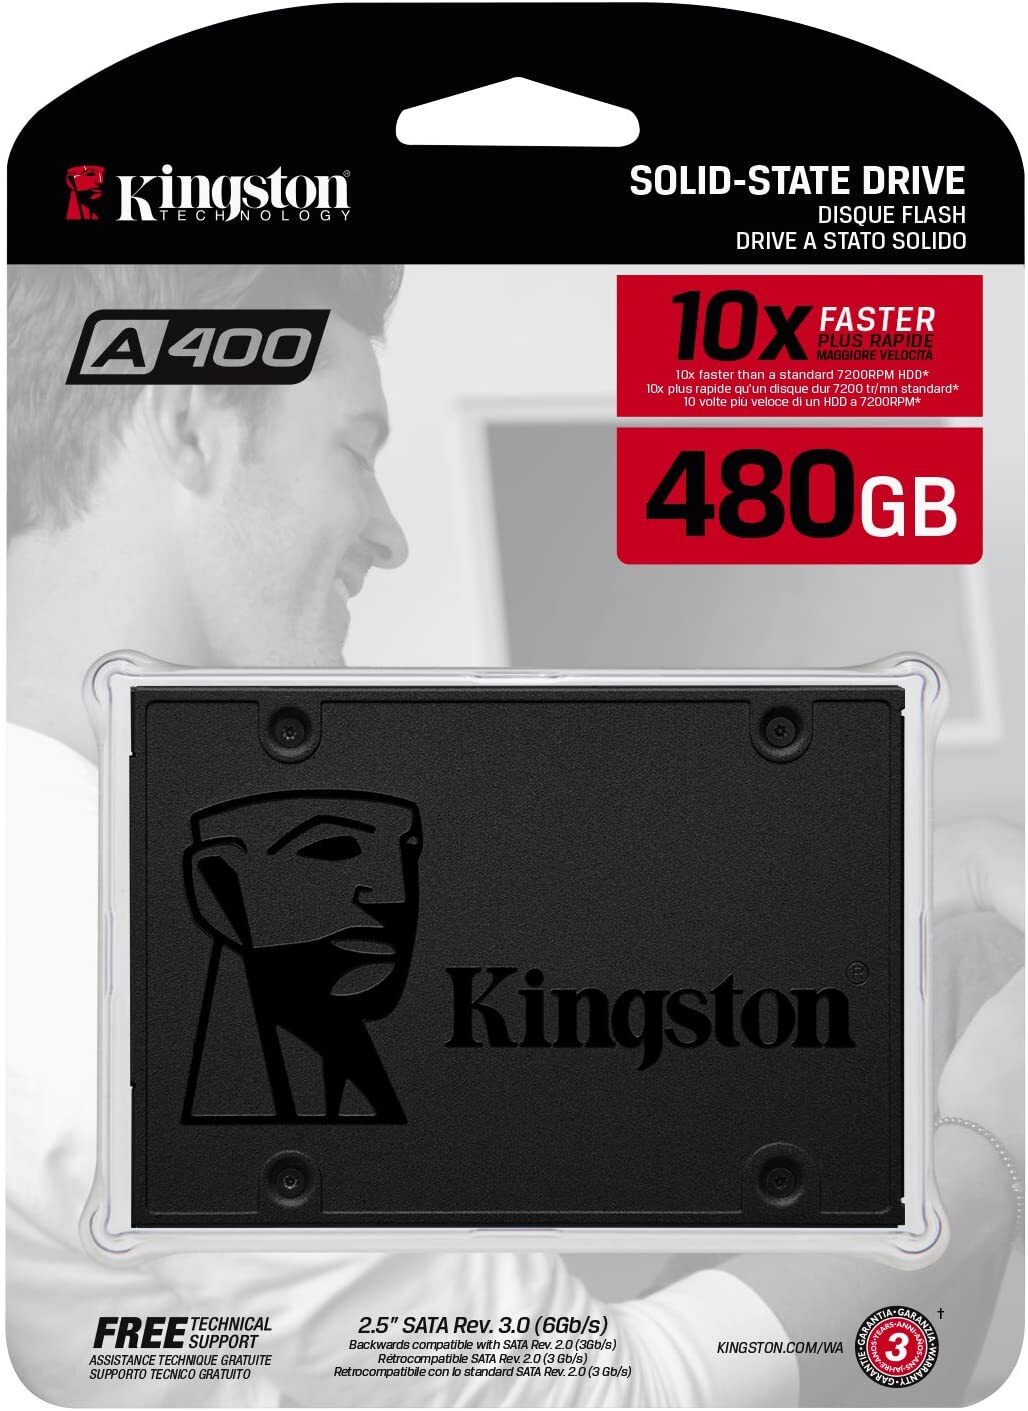 KINGSTON SA400 SSD 480GB 2.5-INCH SATA3 TLC NAND INTERNAL SOLID STATE DRIVE